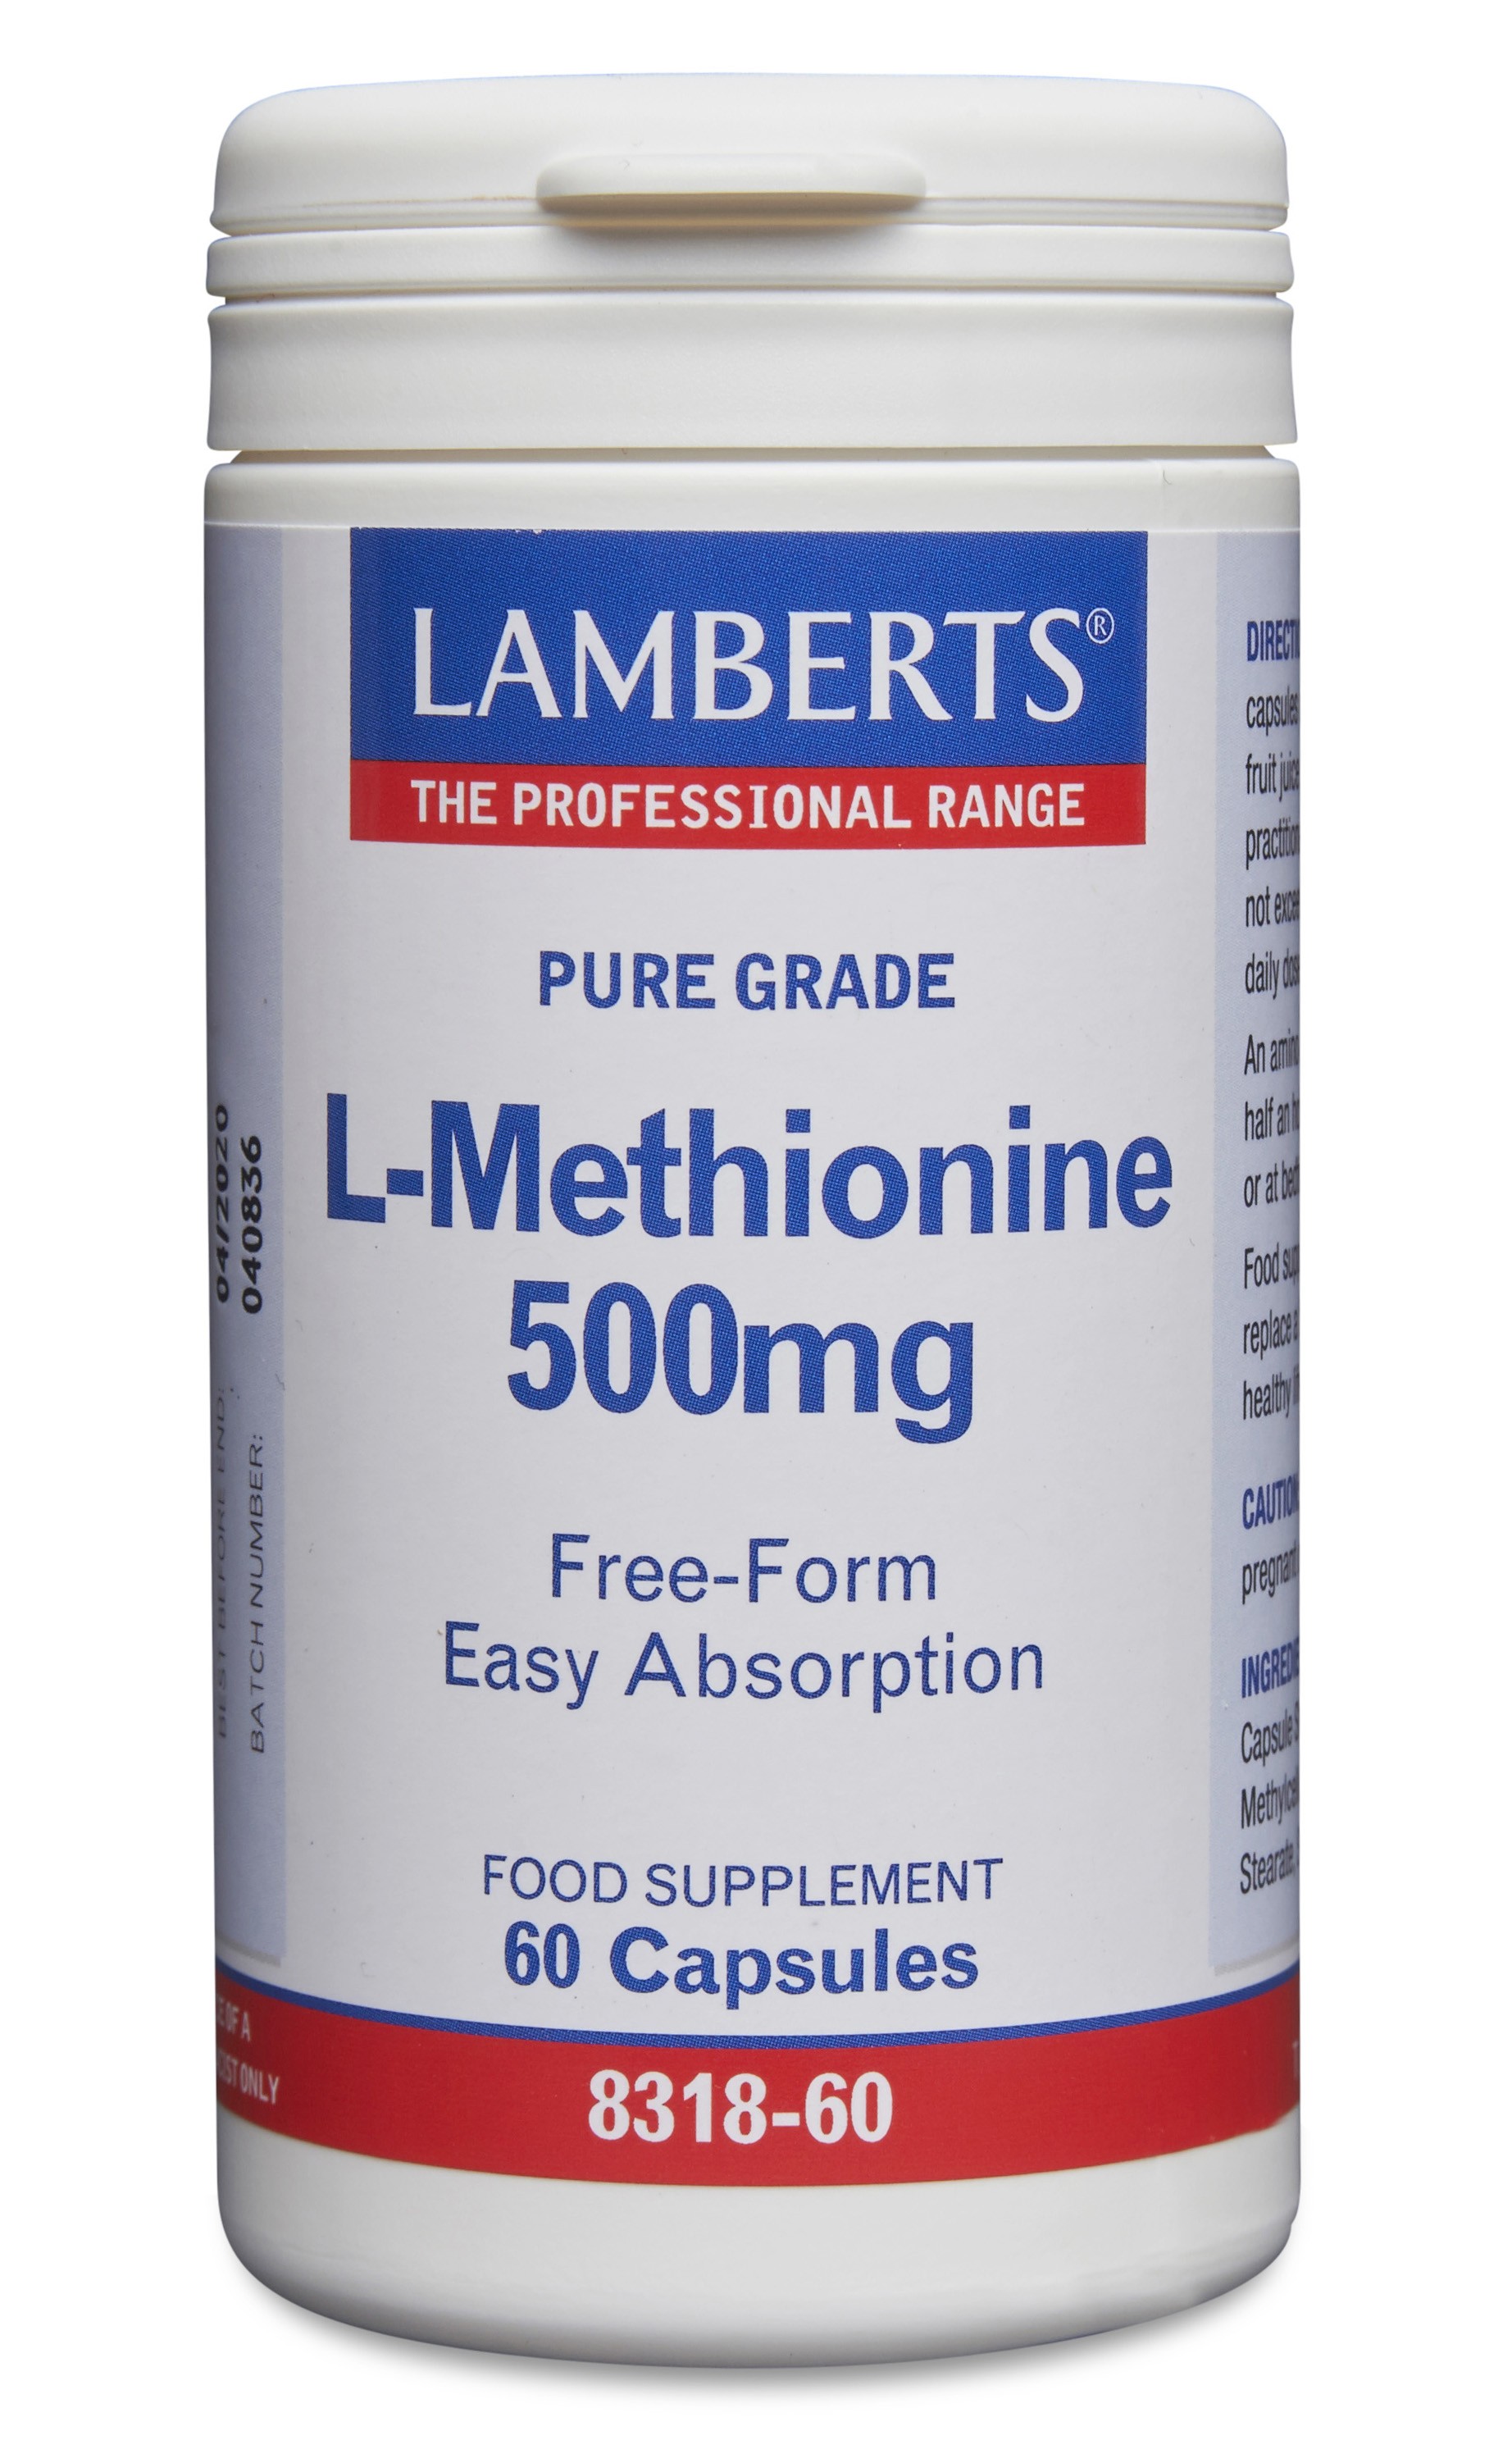 Lamberts L-Methionine 500mg